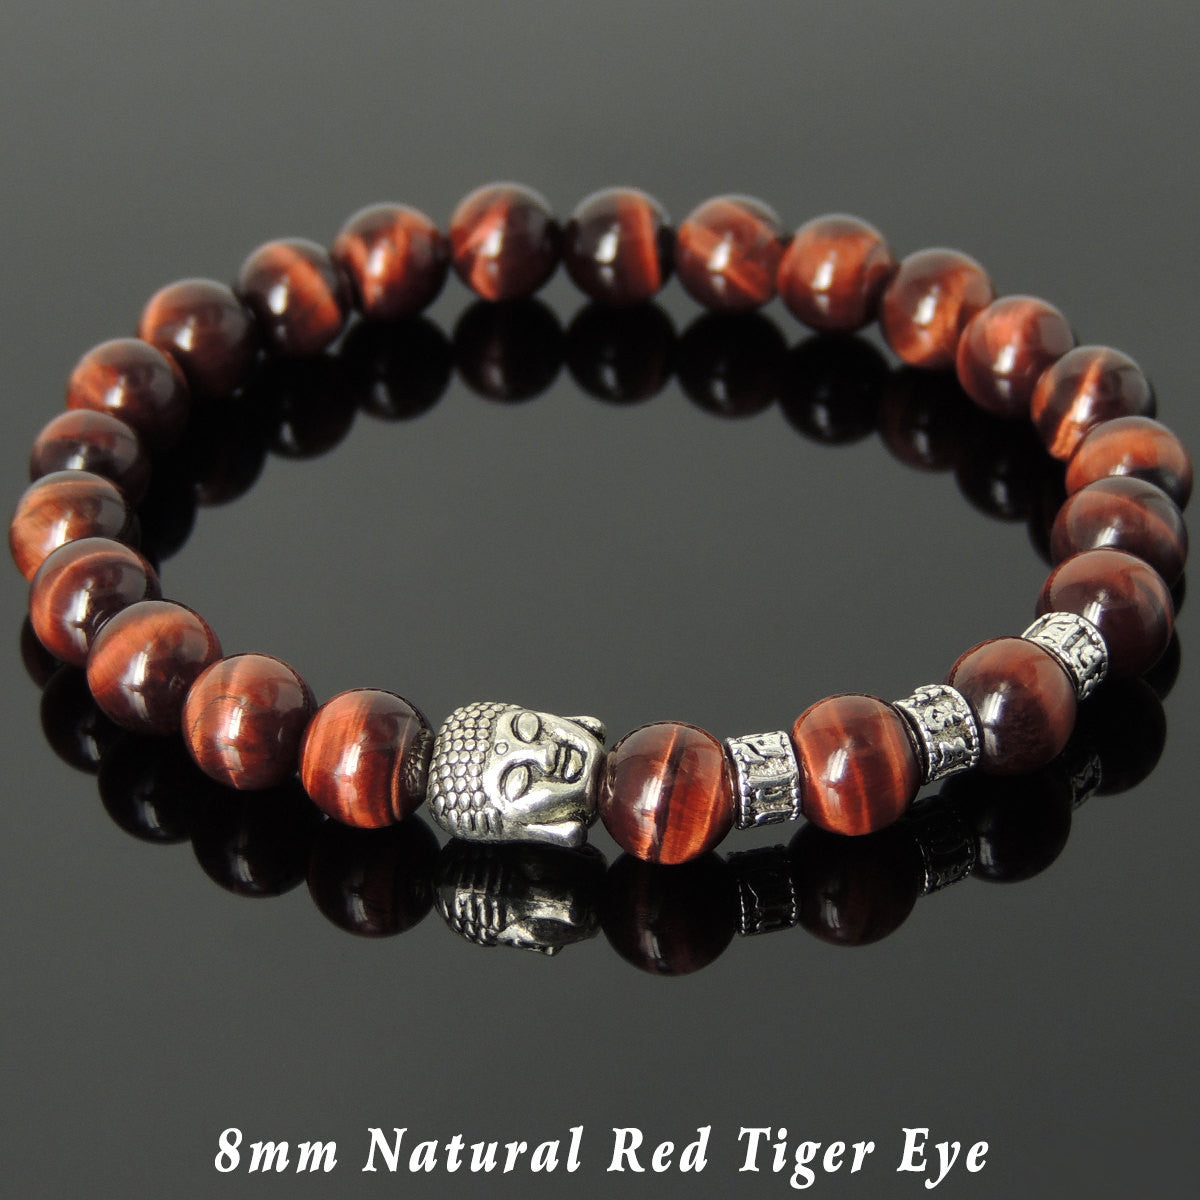 Red Tiger Eye Healing Gemstone Bracelet with Tibetan Silver Sakyamuni Buddha & OM Meditation Spacer Beads - Handmade by Gem & Silver TSB339